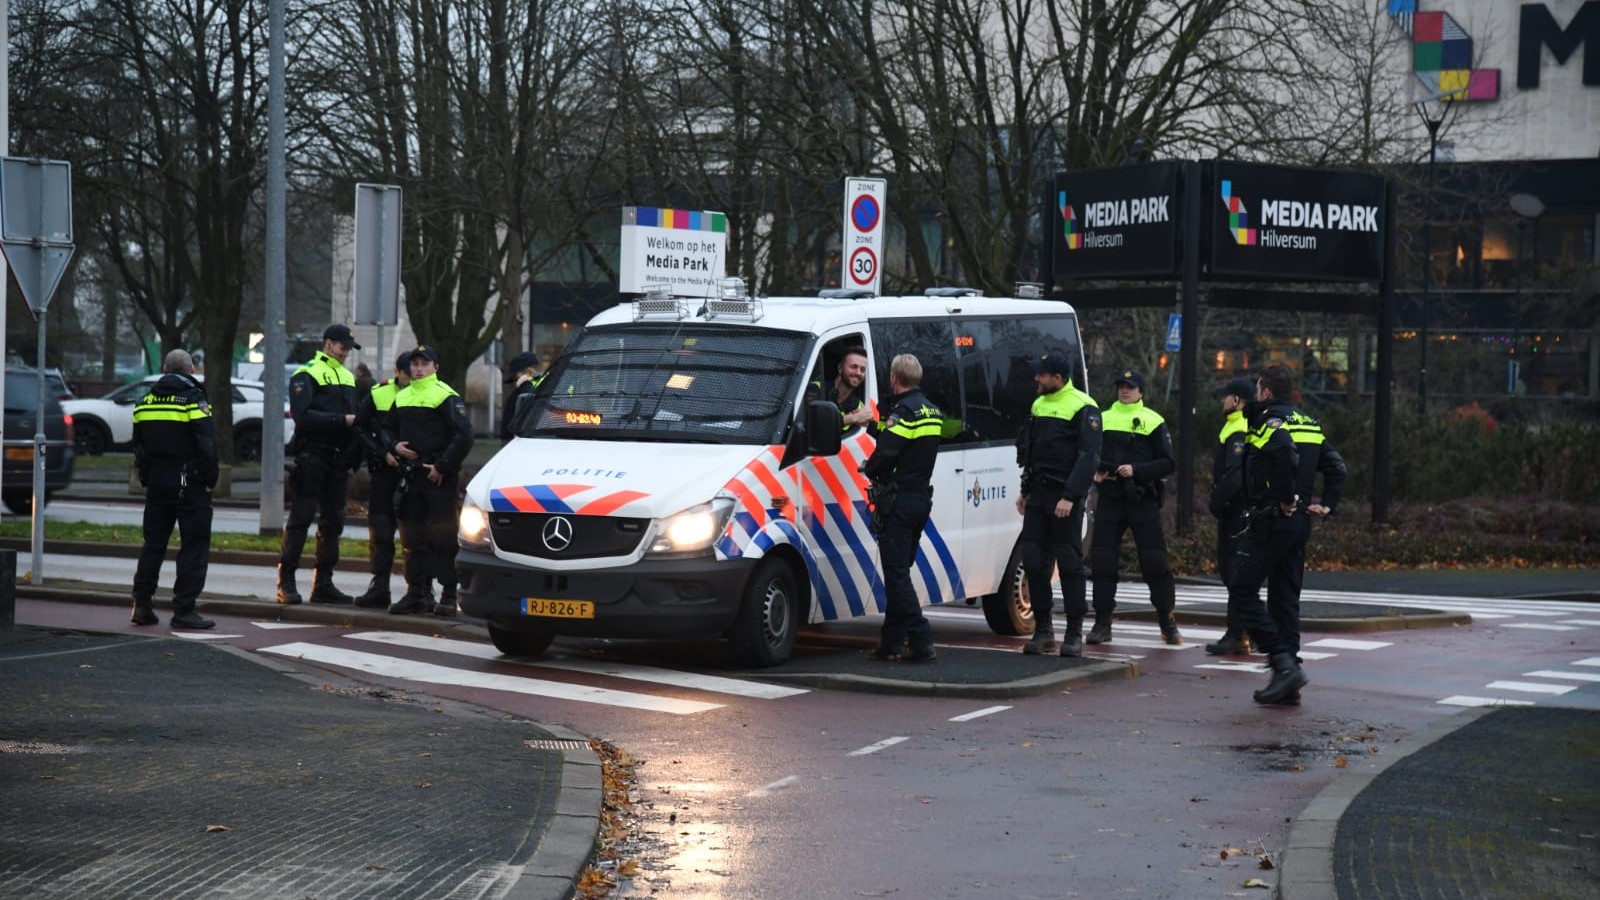 Boerenprotest op Mediapark Hilversum